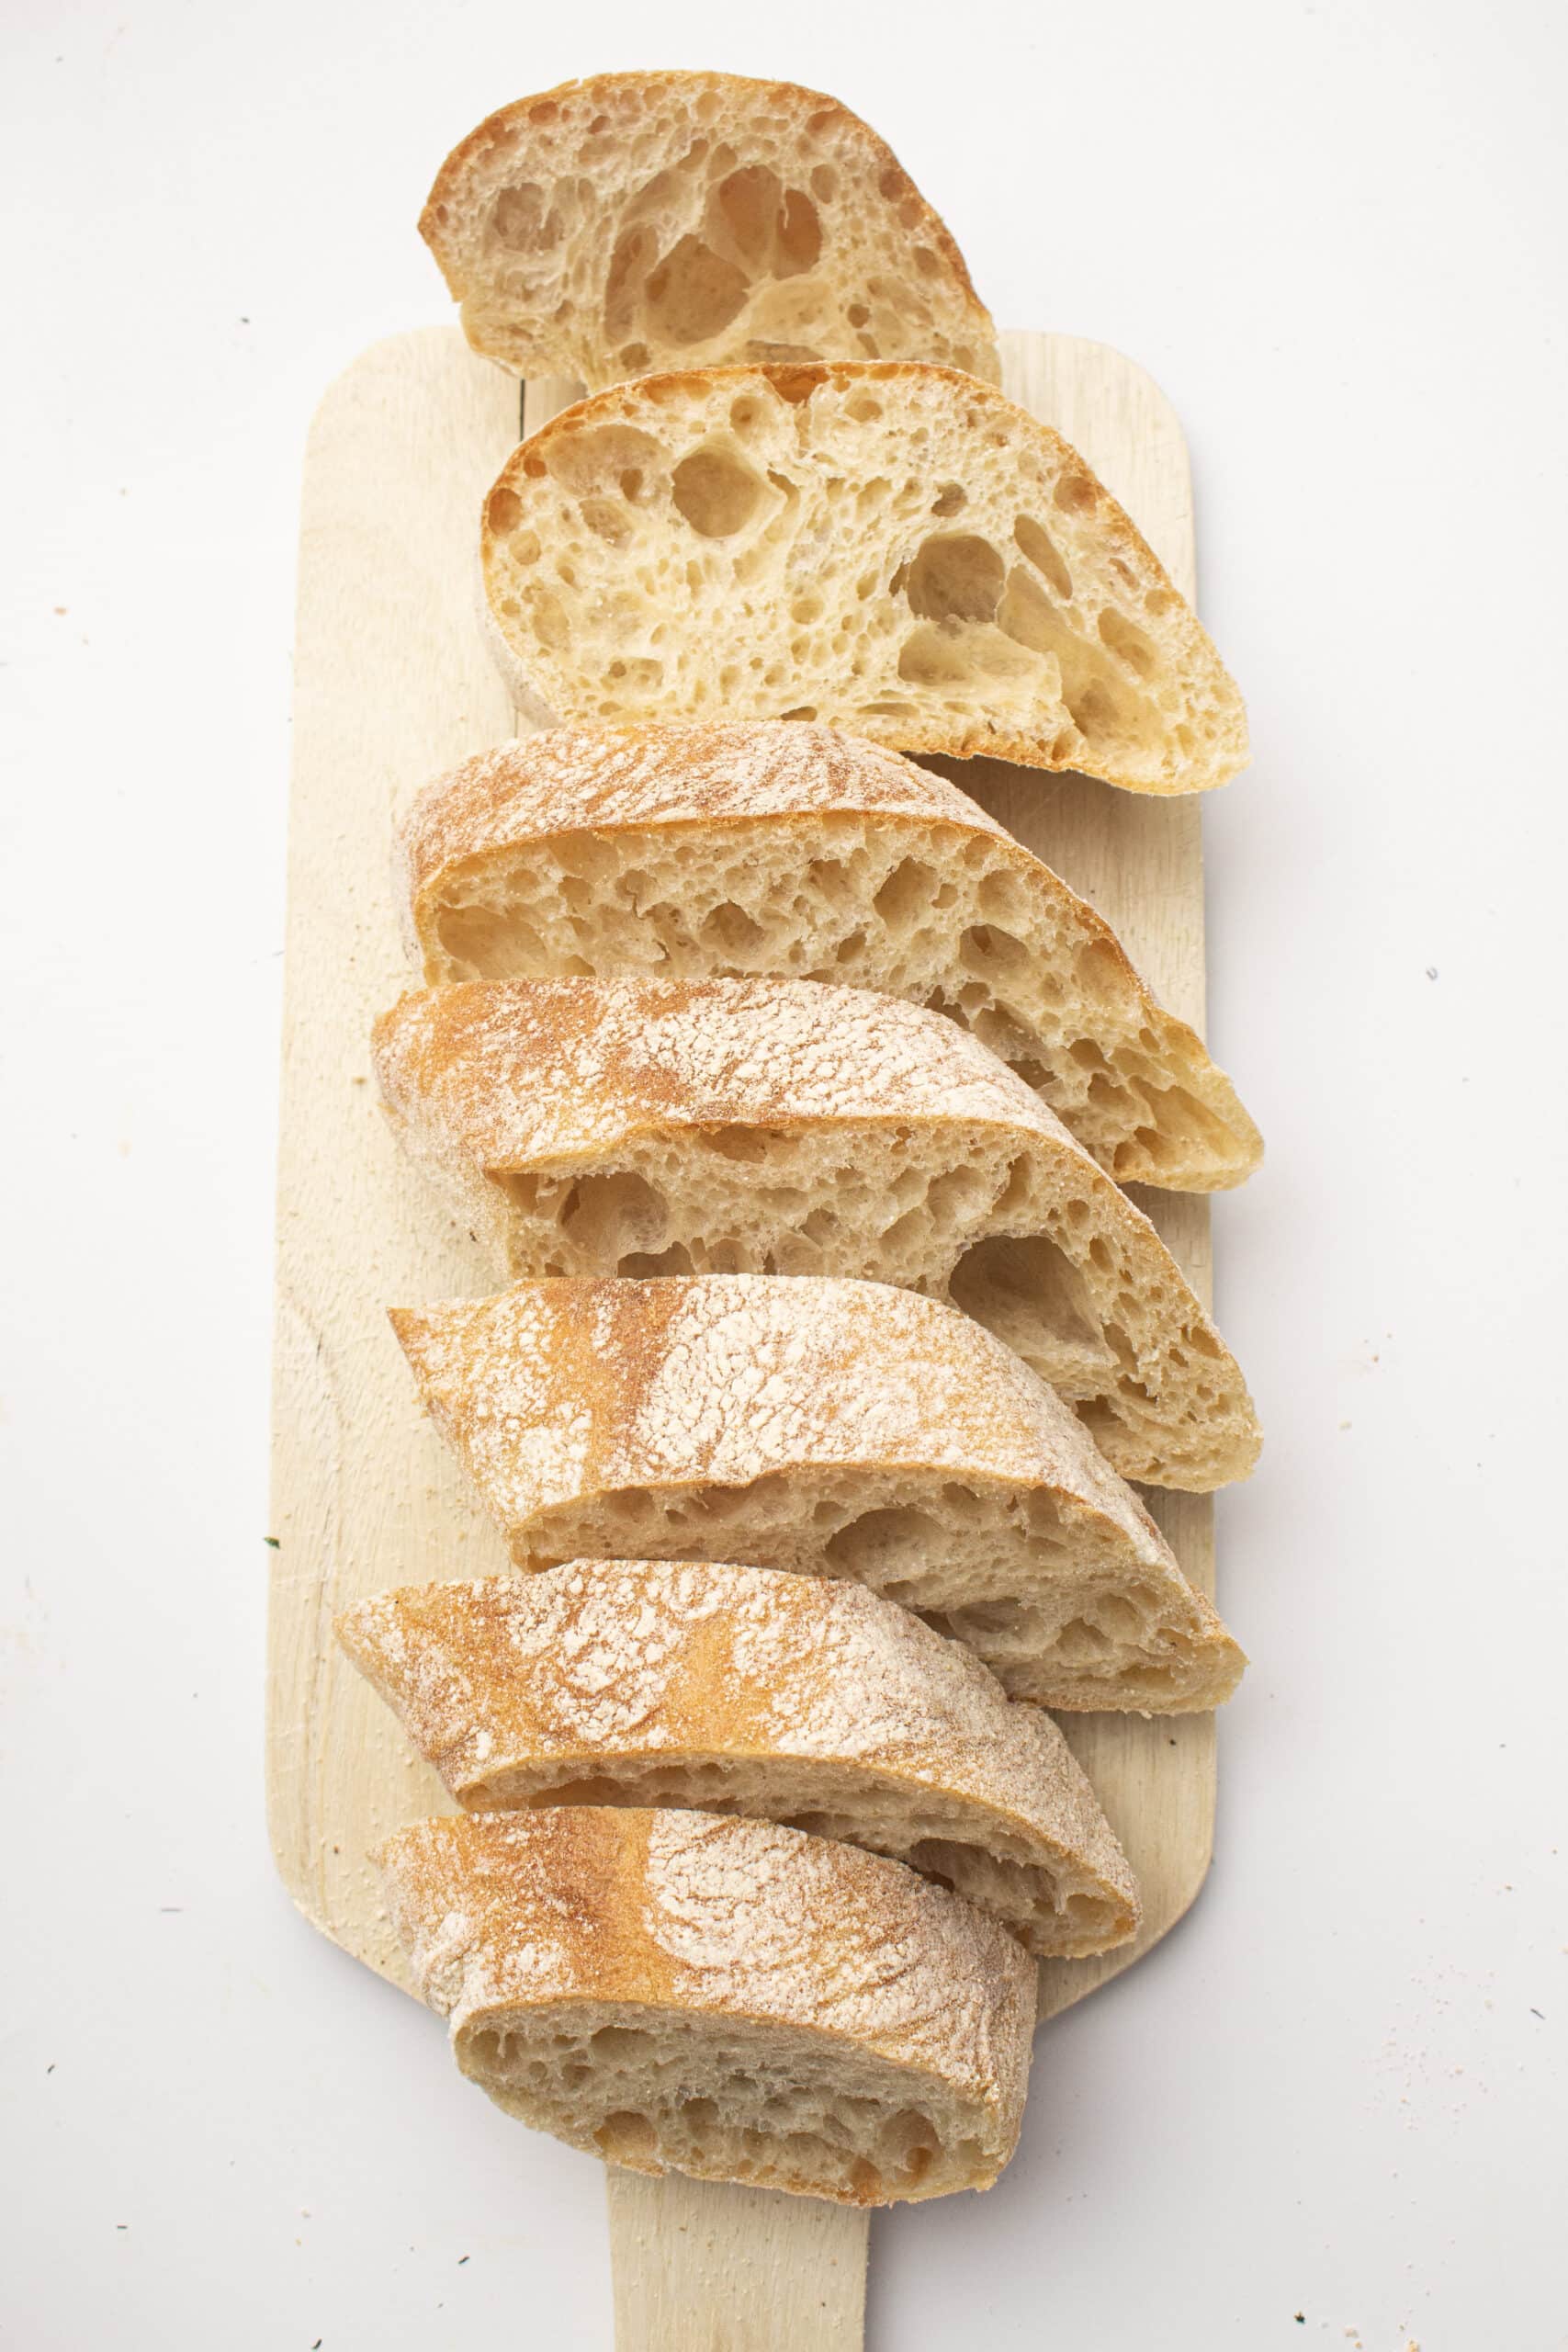 bread slices